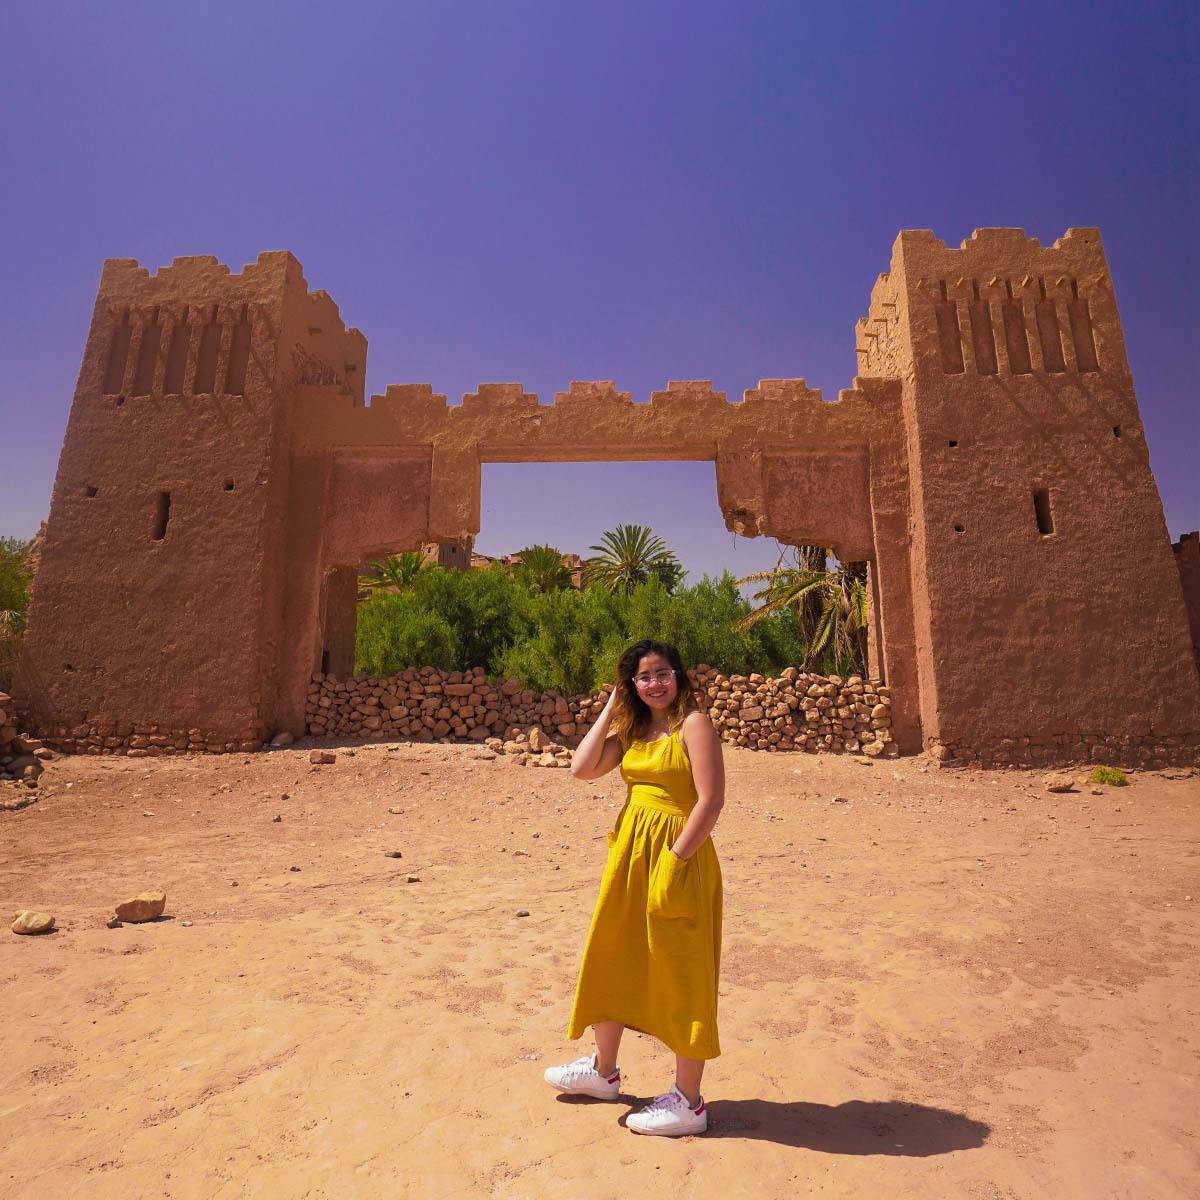 Gate Ruins at Ksar of Ait Ben Haddou - Morocco Photo Guide